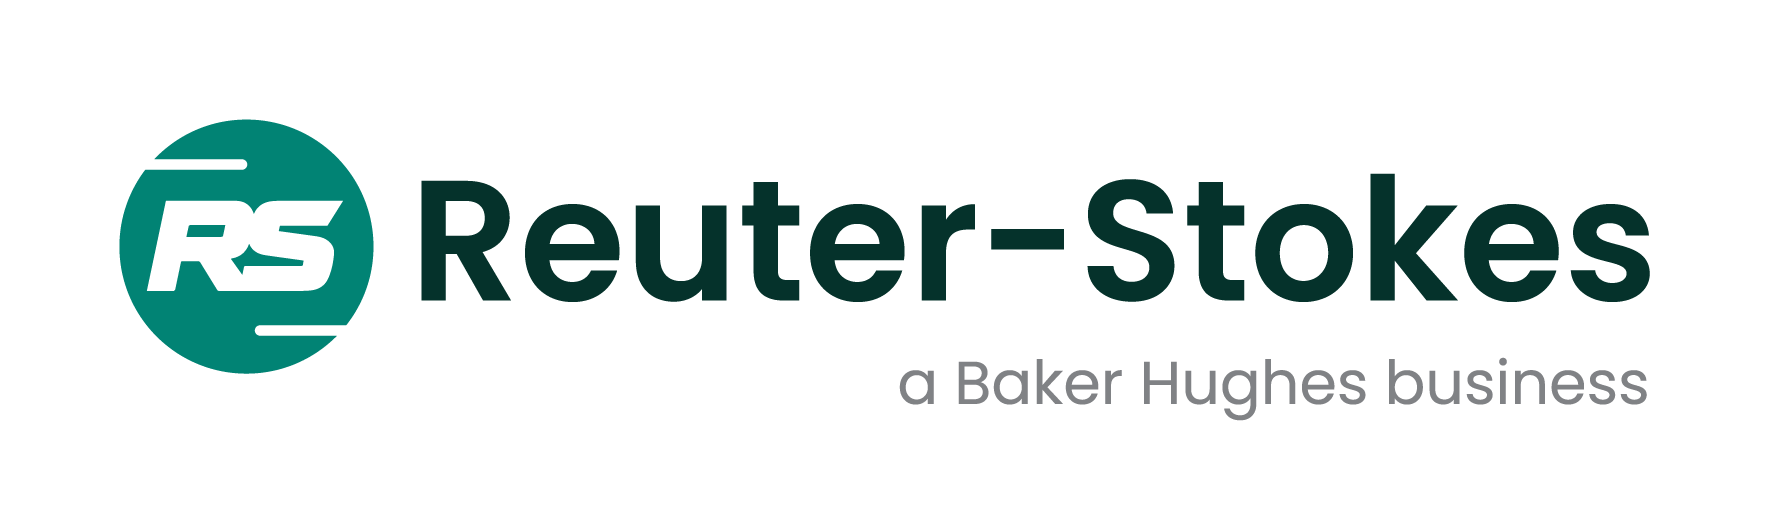 Reuter-Stokes, a Baker Hughes business ホーム